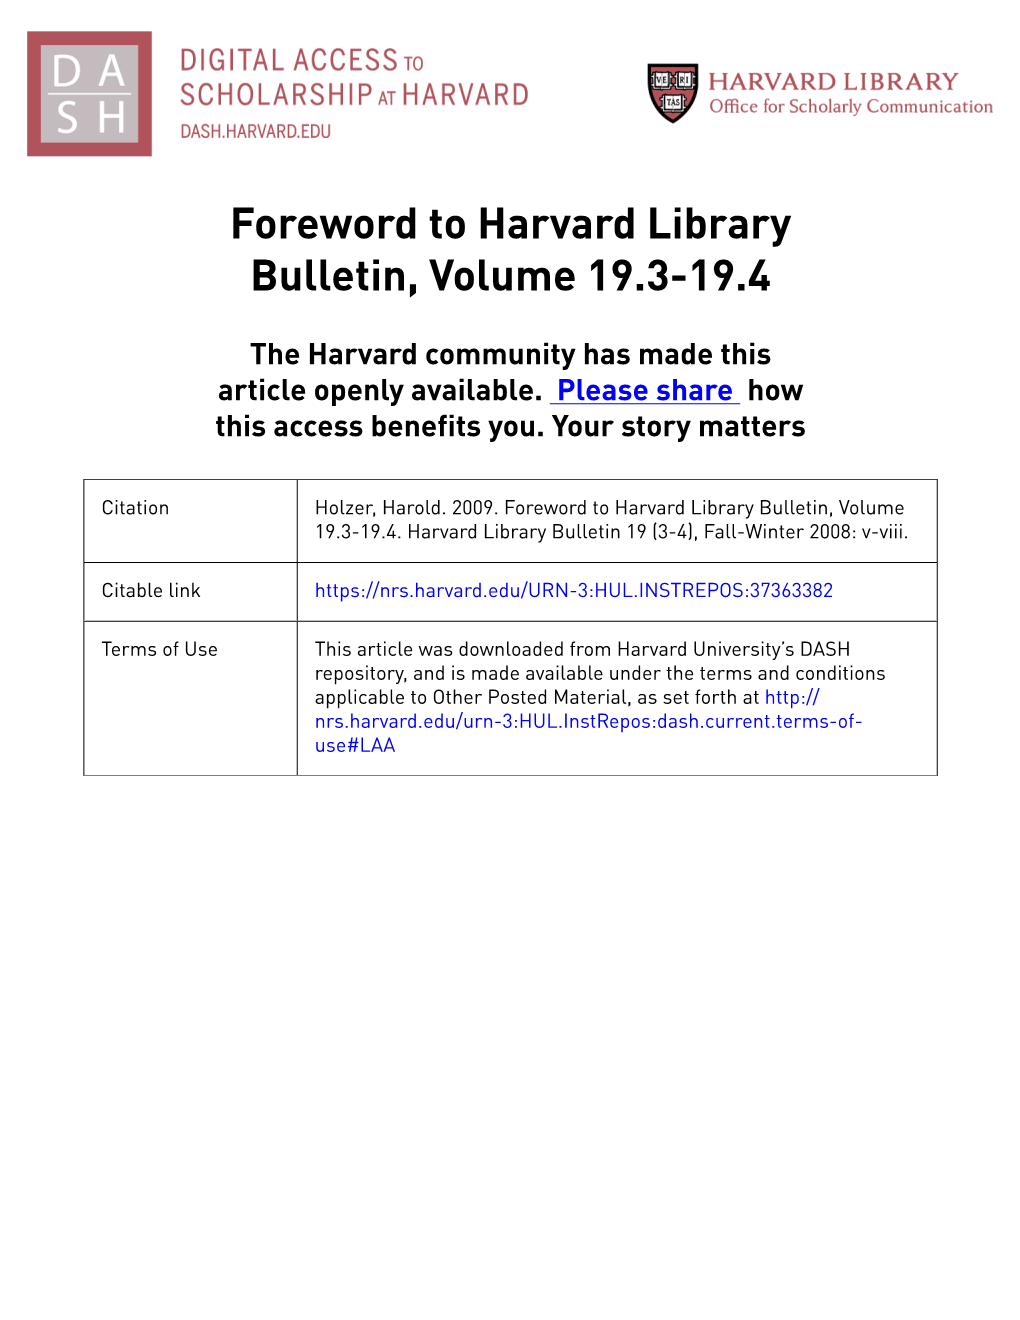 Foreword to Harvard Library Bulletin, Volume 19.3-19.4